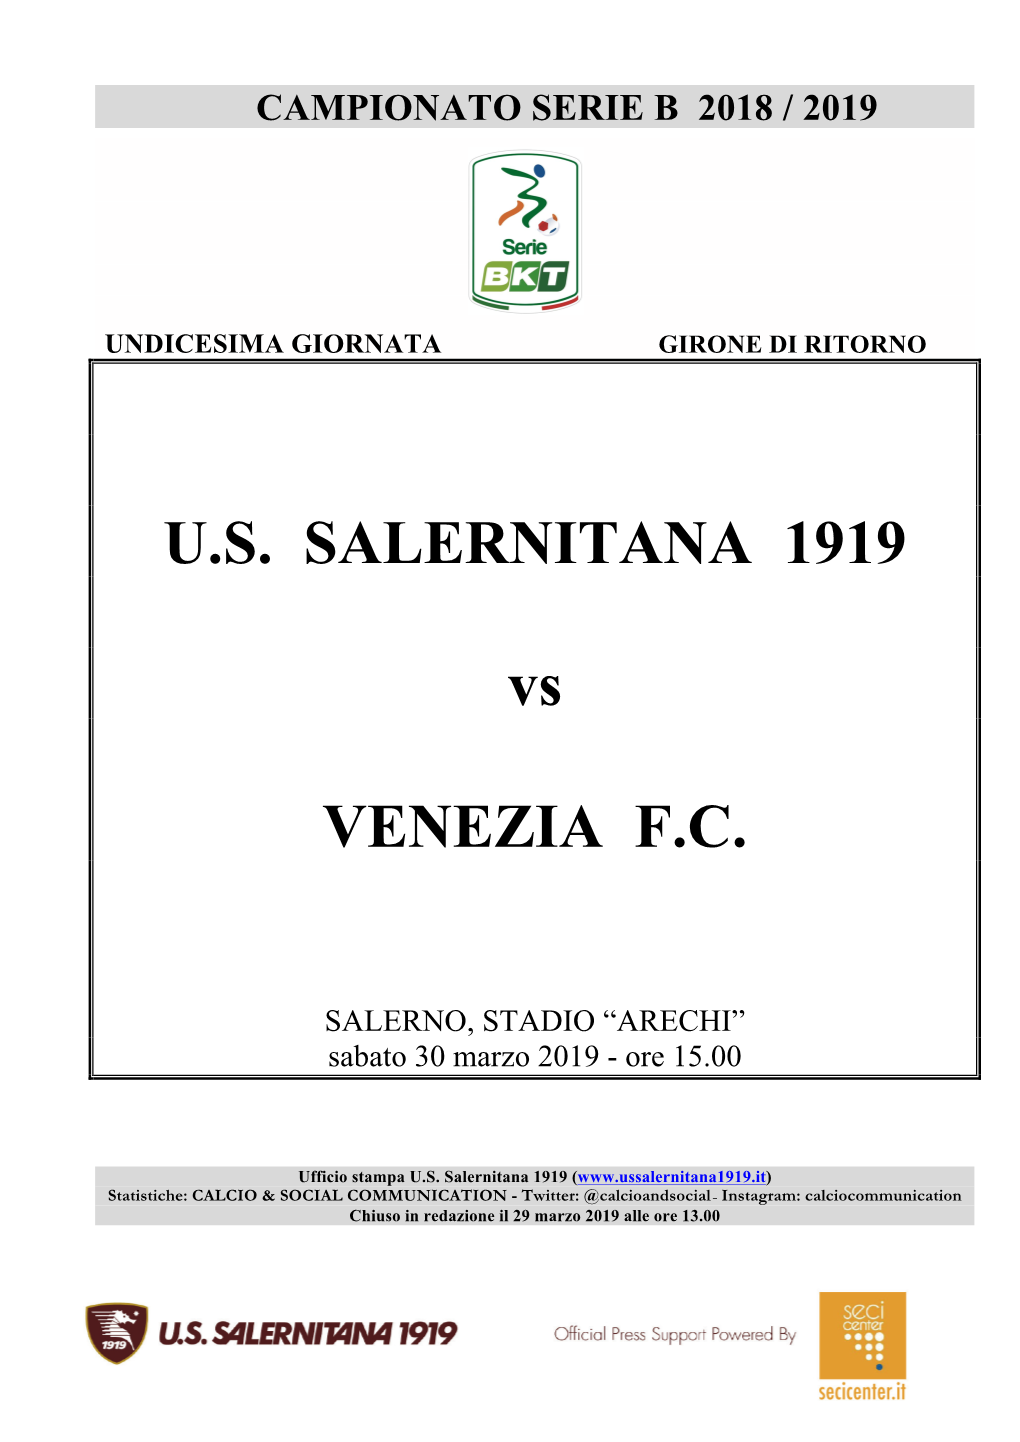 U.S. SALERNITANA 1919 Vs VENEZIA F.C